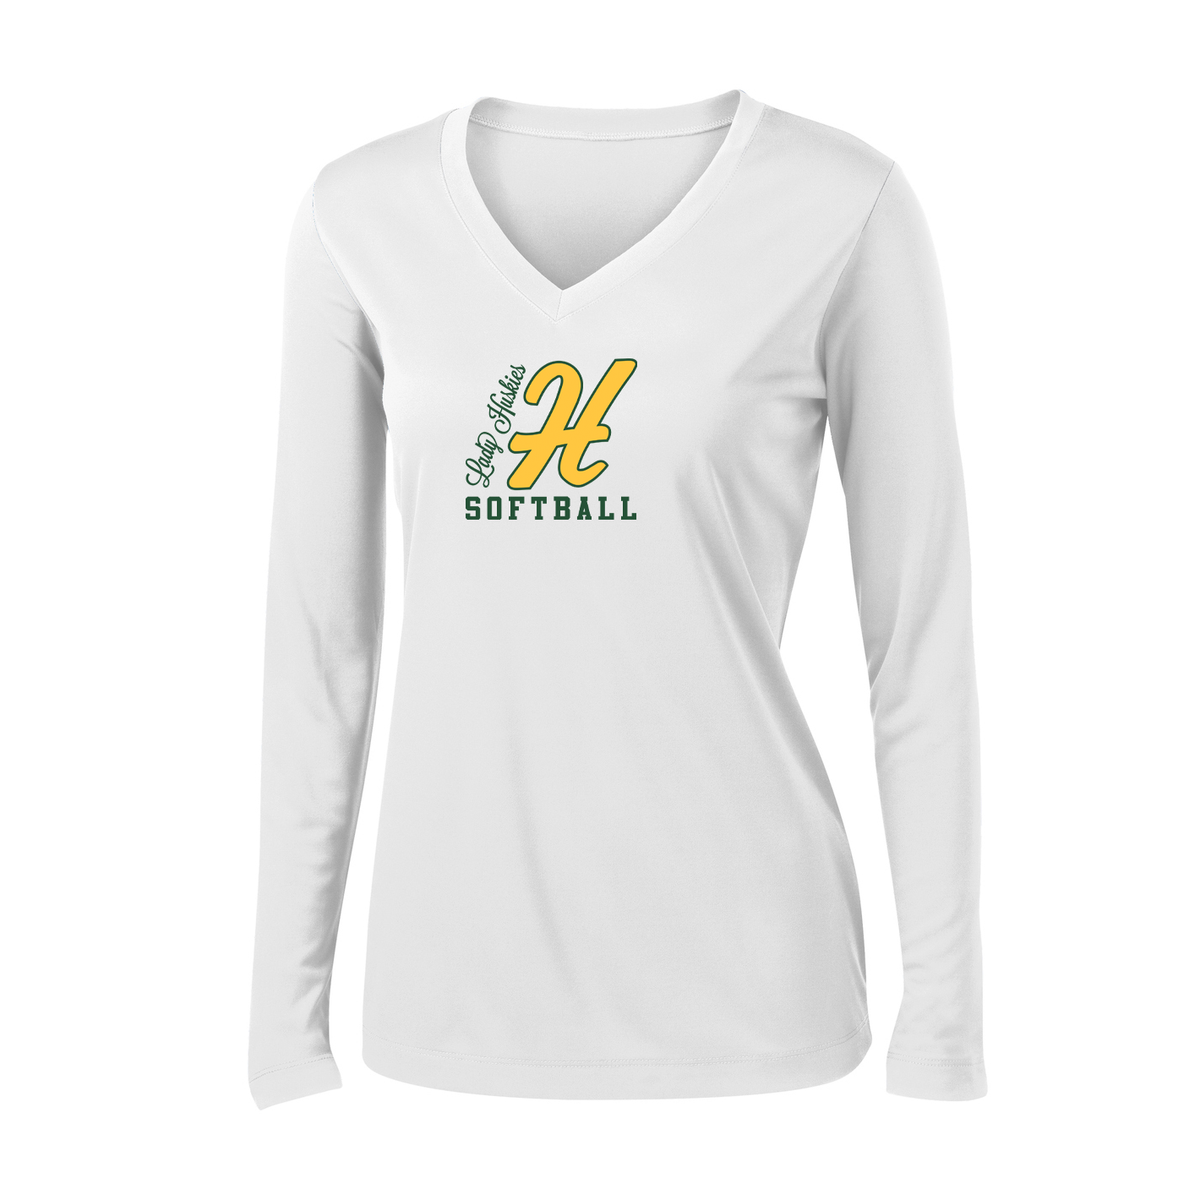 Horizon Softball Women's Long Sleeve Performance Shirt